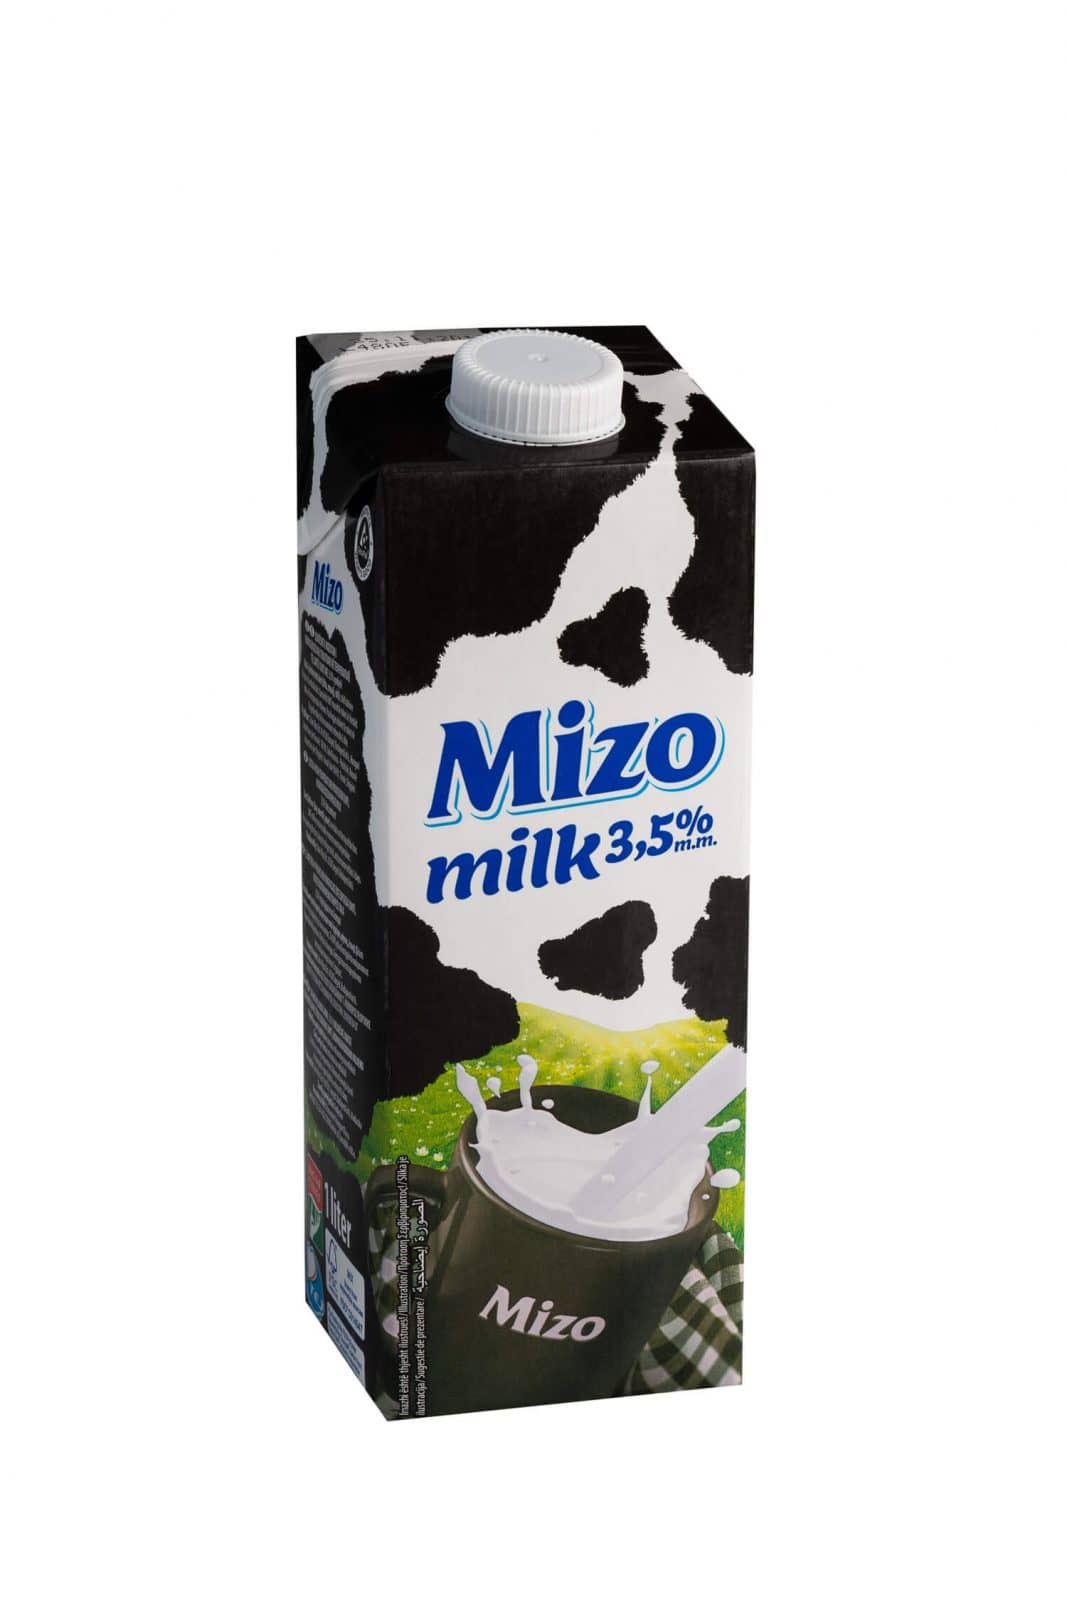 KT FOOD Mizo milk 3.5